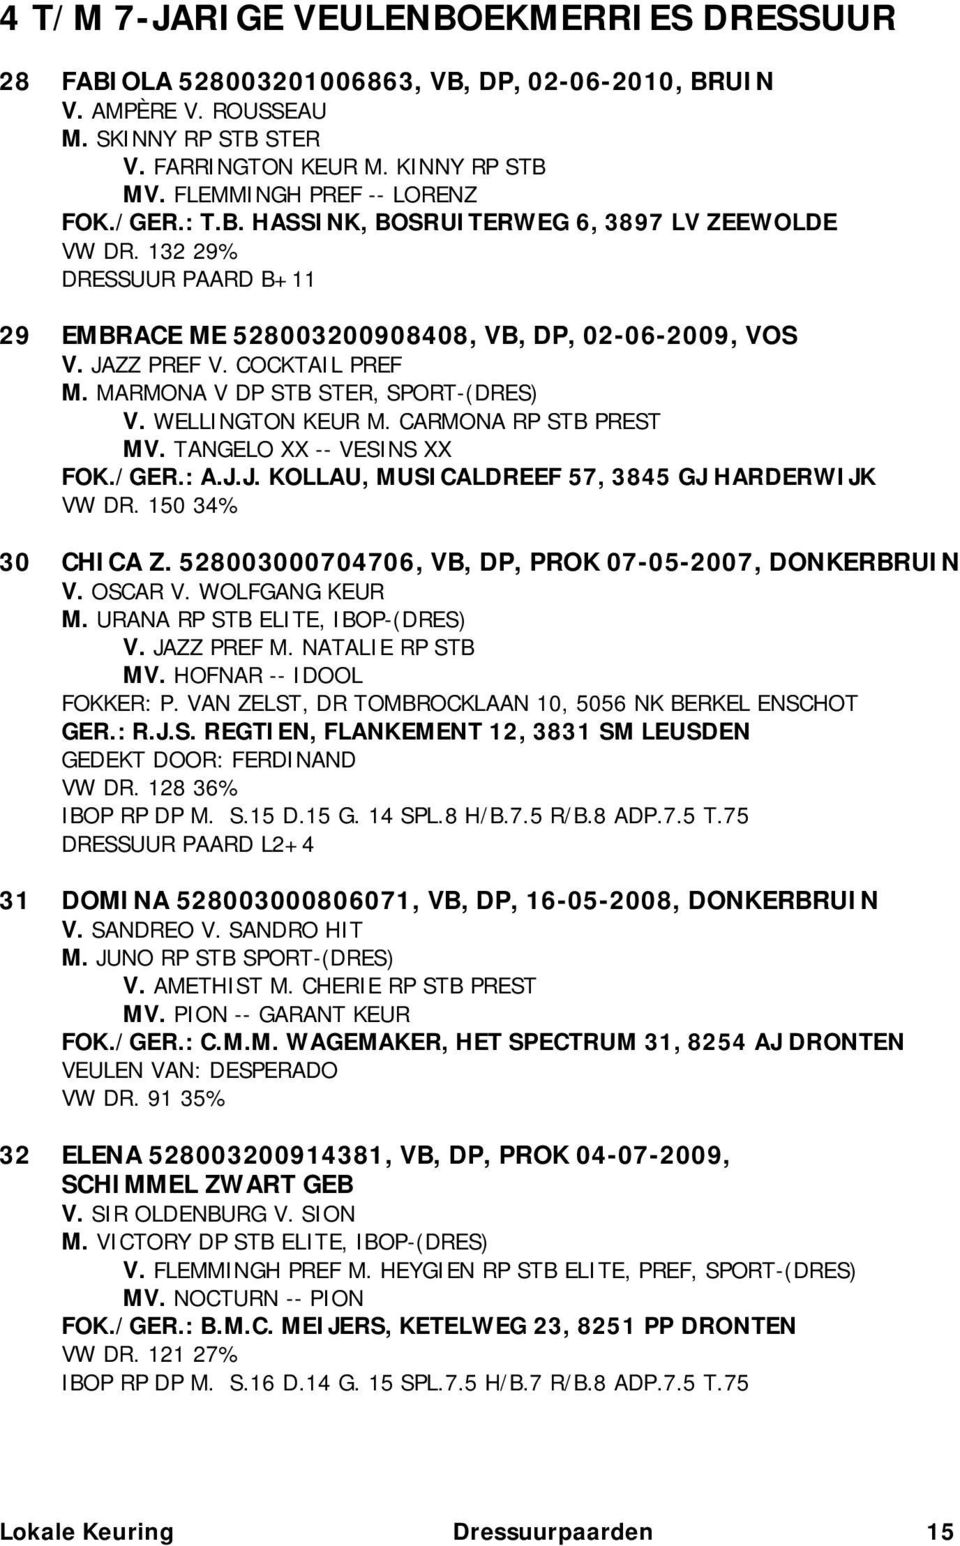 COCKTAIL PREF M. MARMONA V DP STB STER, SPORT-(DRES) V. WELLINGTON KEUR M. CARMONA RP STB PREST MV. TANGELO XX -- VESINS XX FOK./GER.: A.J.J. KOLLAU, MUSICALDREEF 57, 3845 GJ HARDERWIJK VW DR.